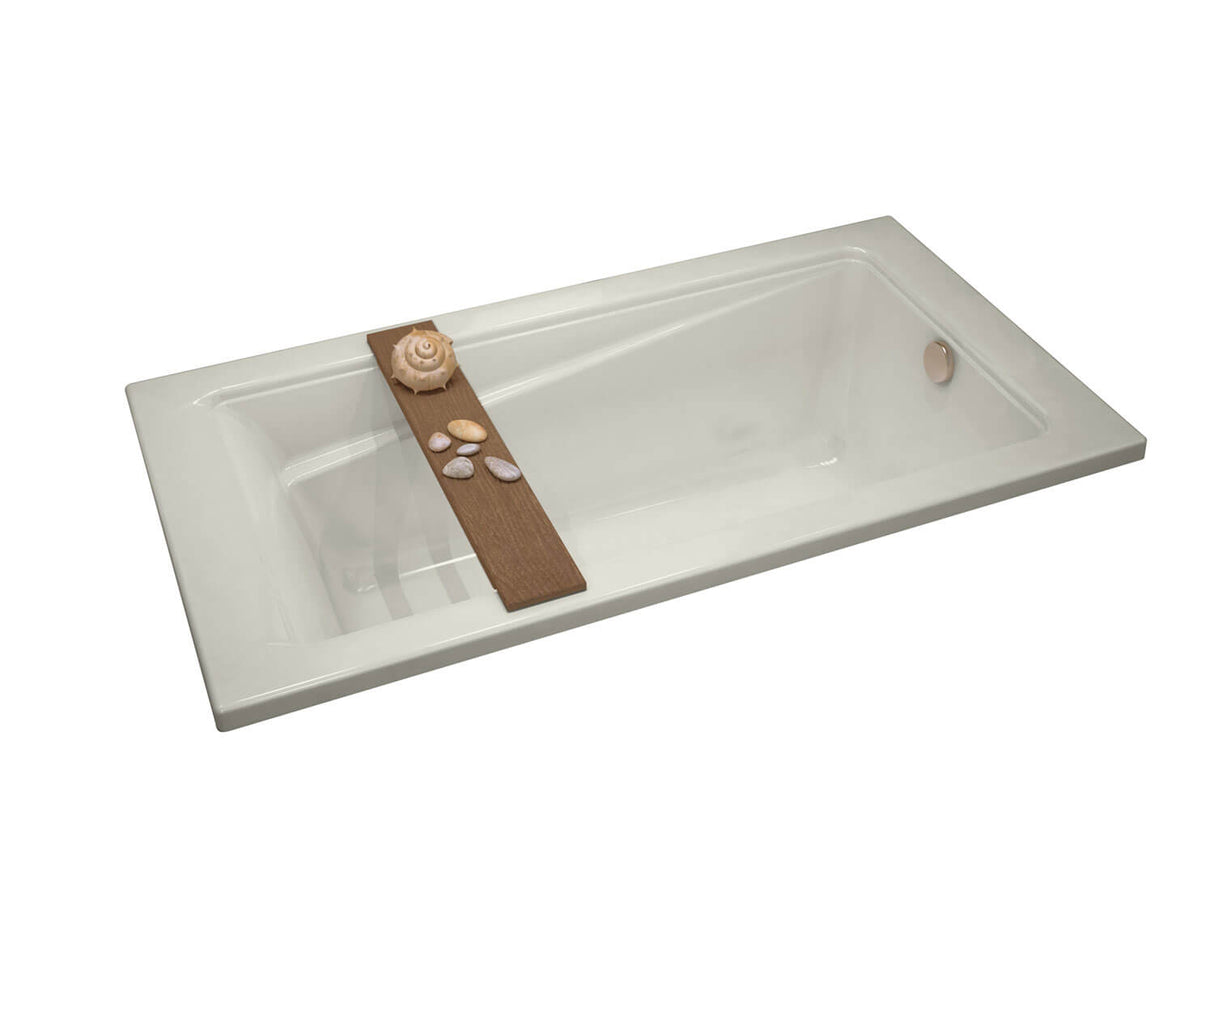 MAAX 106223-003-007 Exhibit 7234 Acrylic Drop-in End Drain Whirlpool Bathtub in Biscuit